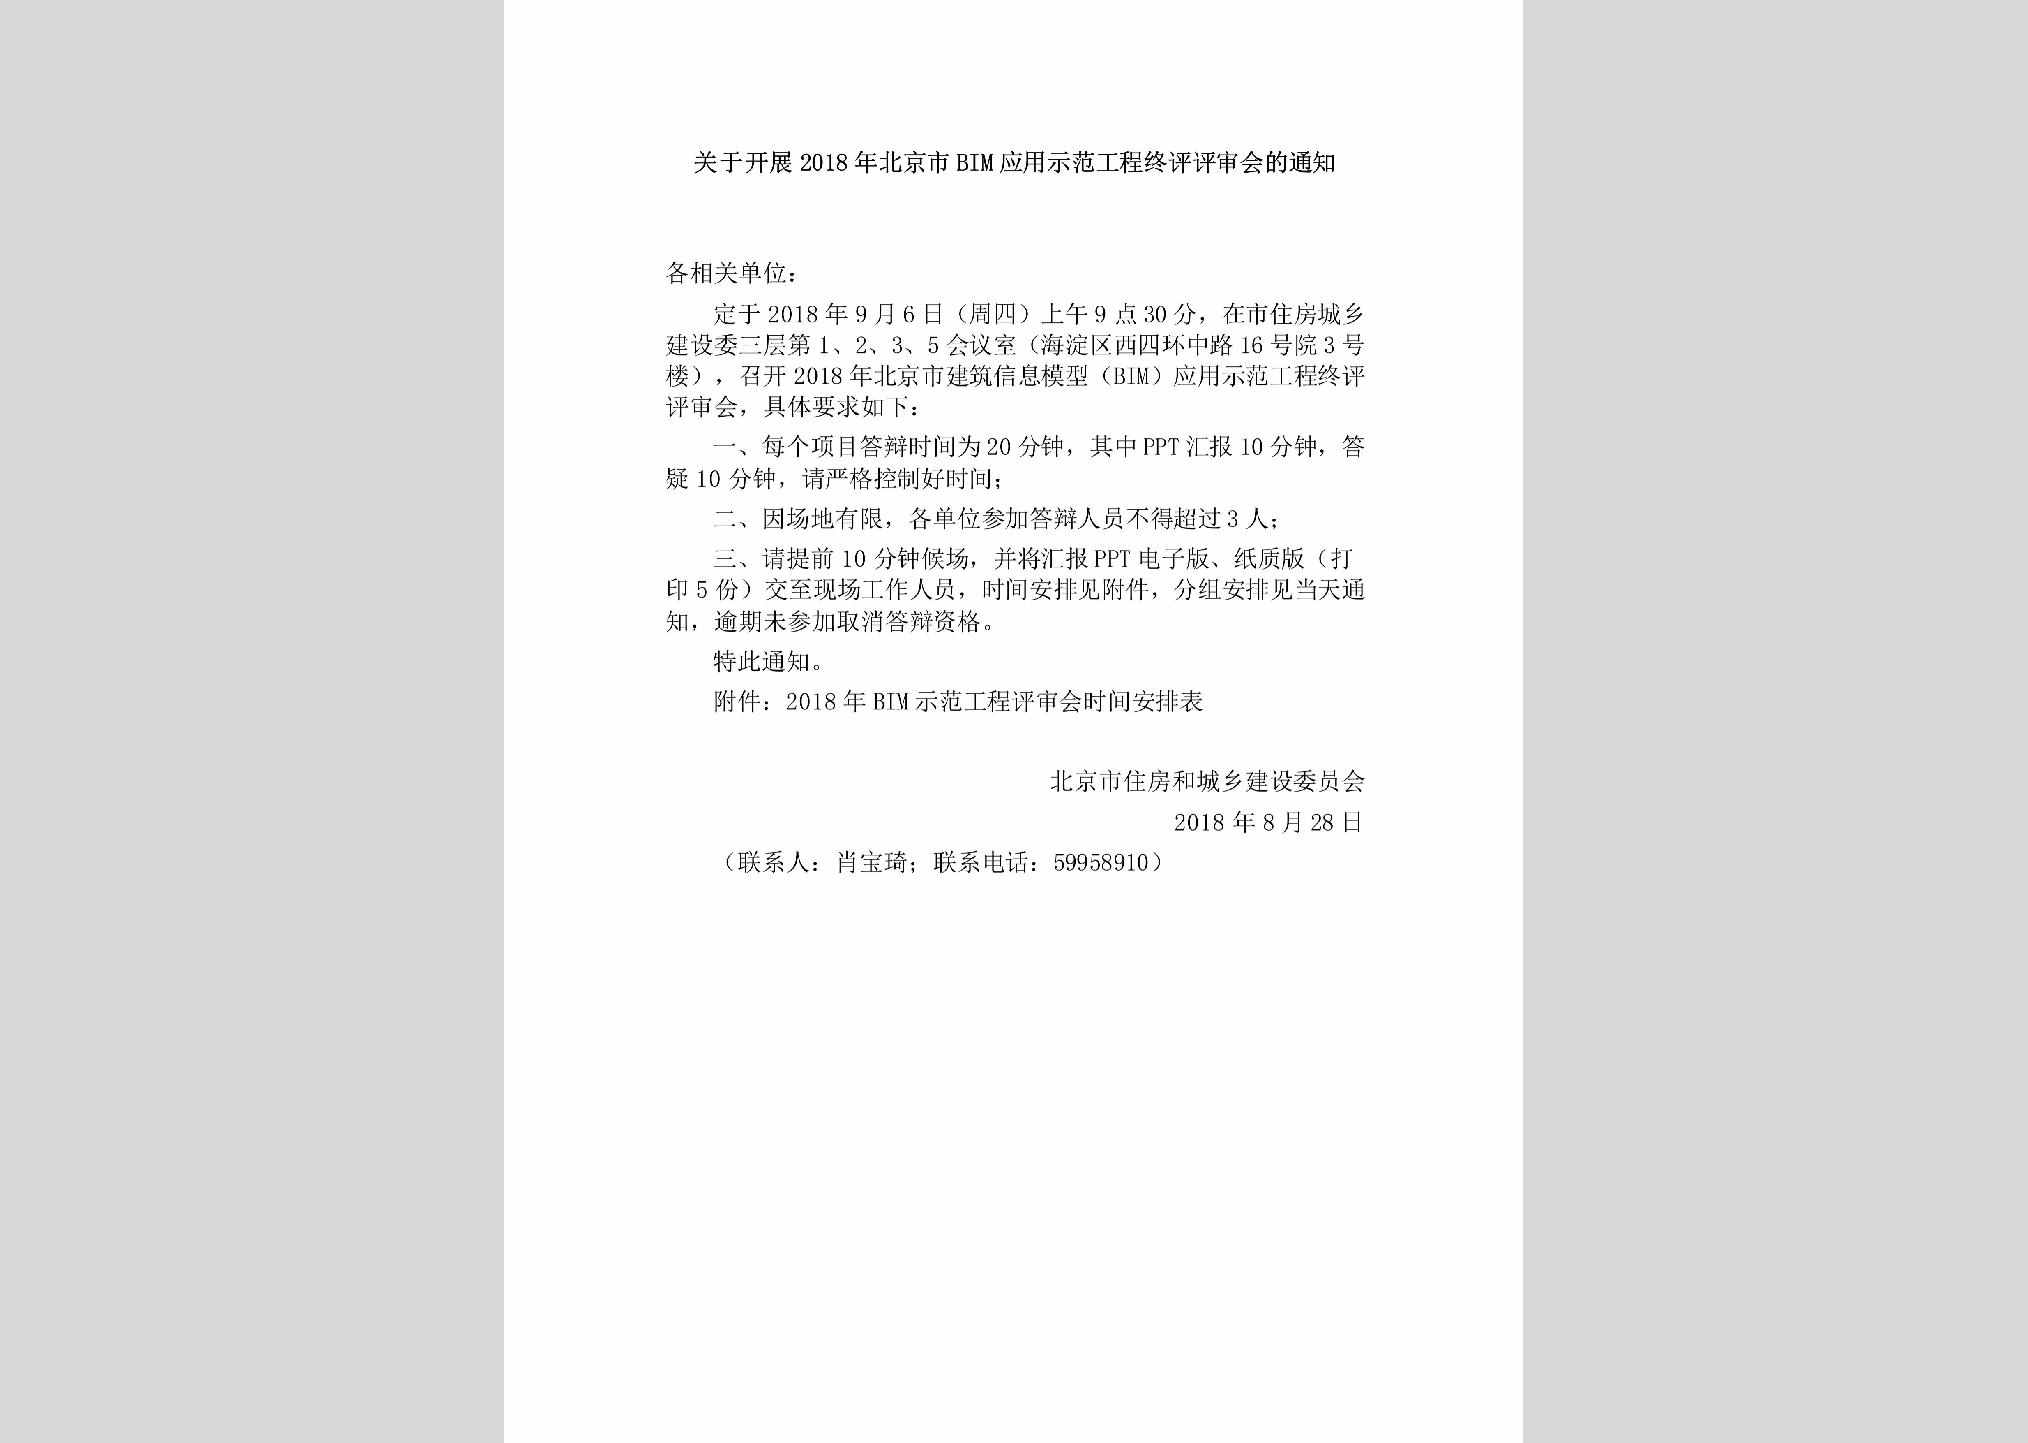 BJ-SFGCZPPS-2018：关于开展2018年北京市BIM应用示范工程终评评审会的通知